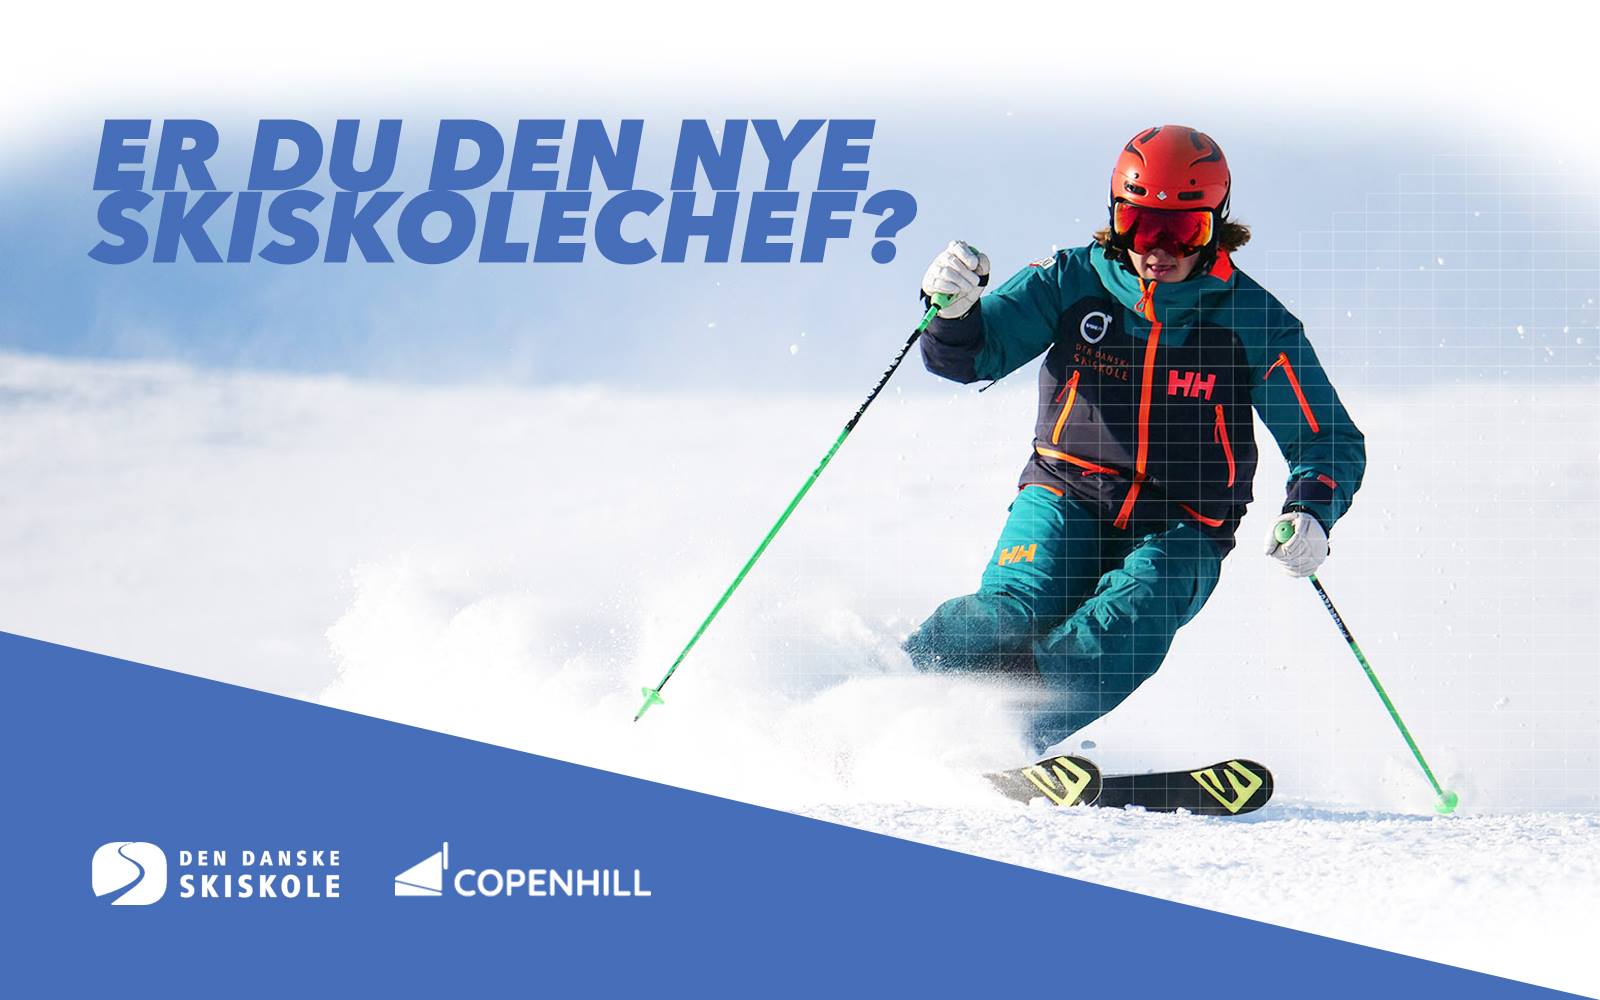 https://riders.dk/wp-content/uploads/2018/09/skiskolechef-copenhill.jpg